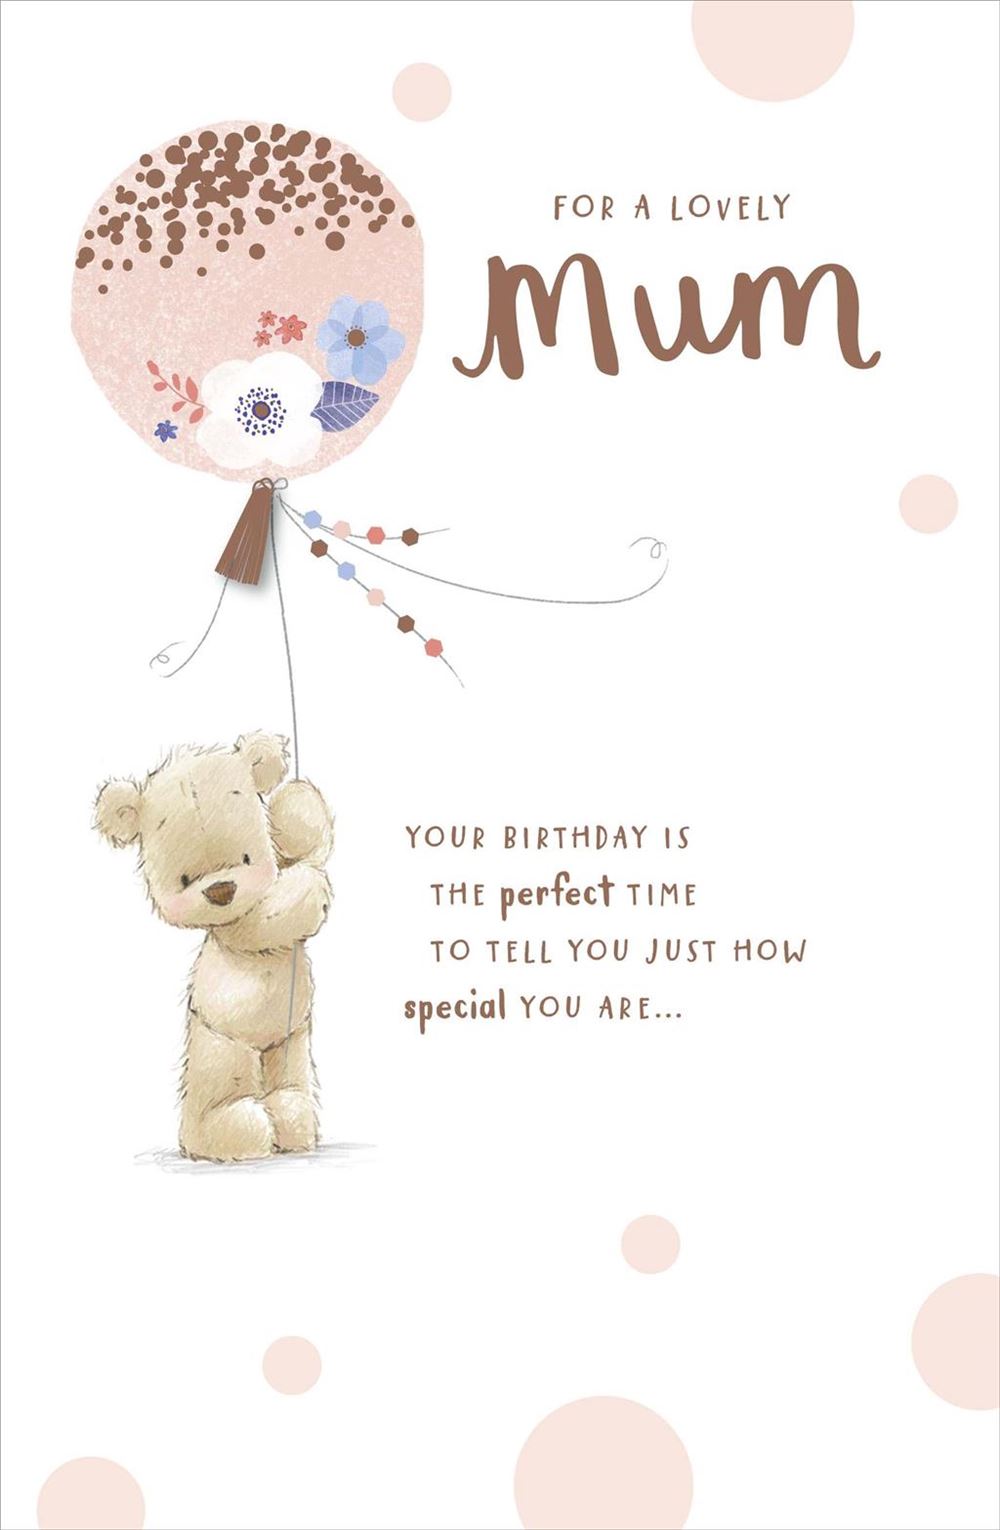 Mum Birthday Card - Loving Teddy And Balloon